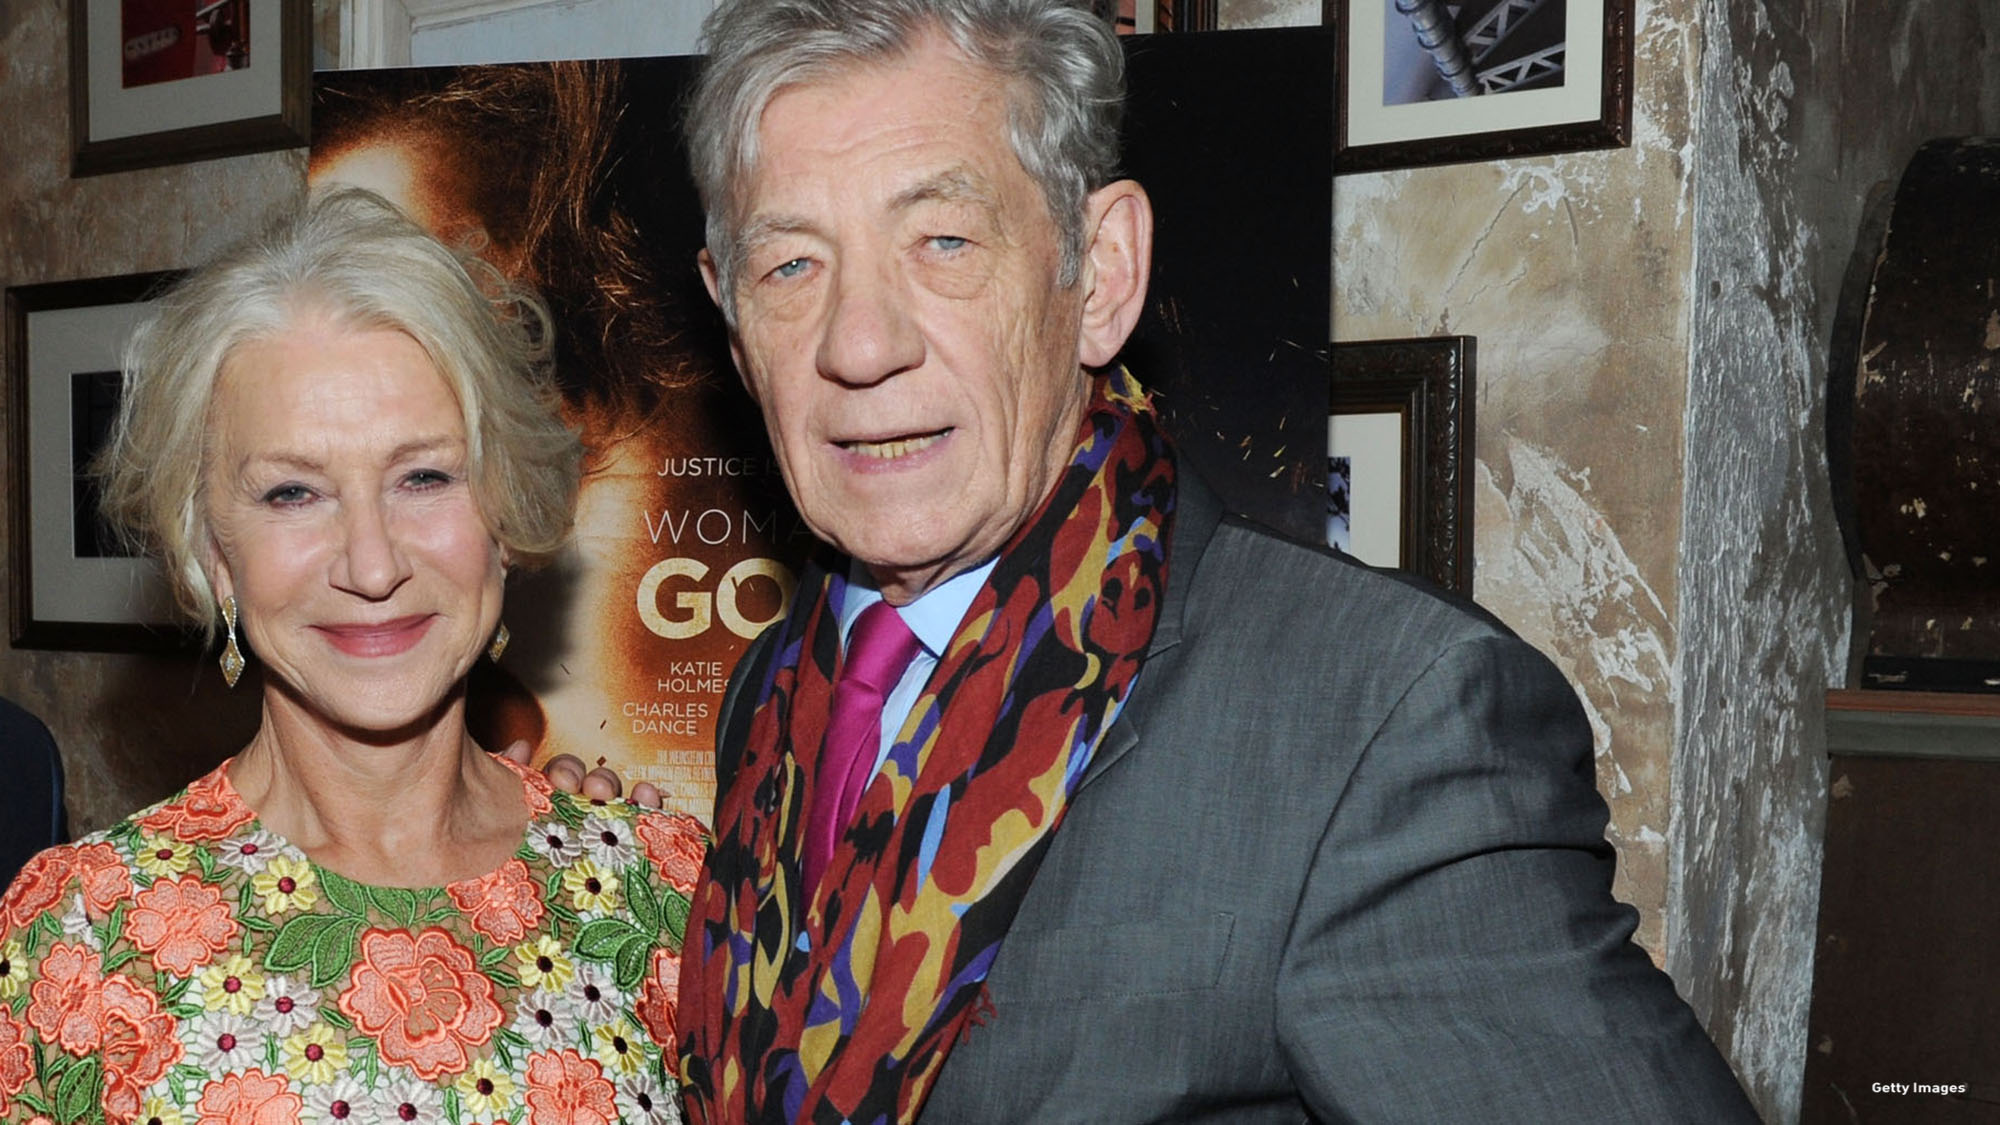 The Good Liar | Drama da Warner Bros com Ian McKellen e Helen Mirren ganha data de estreia